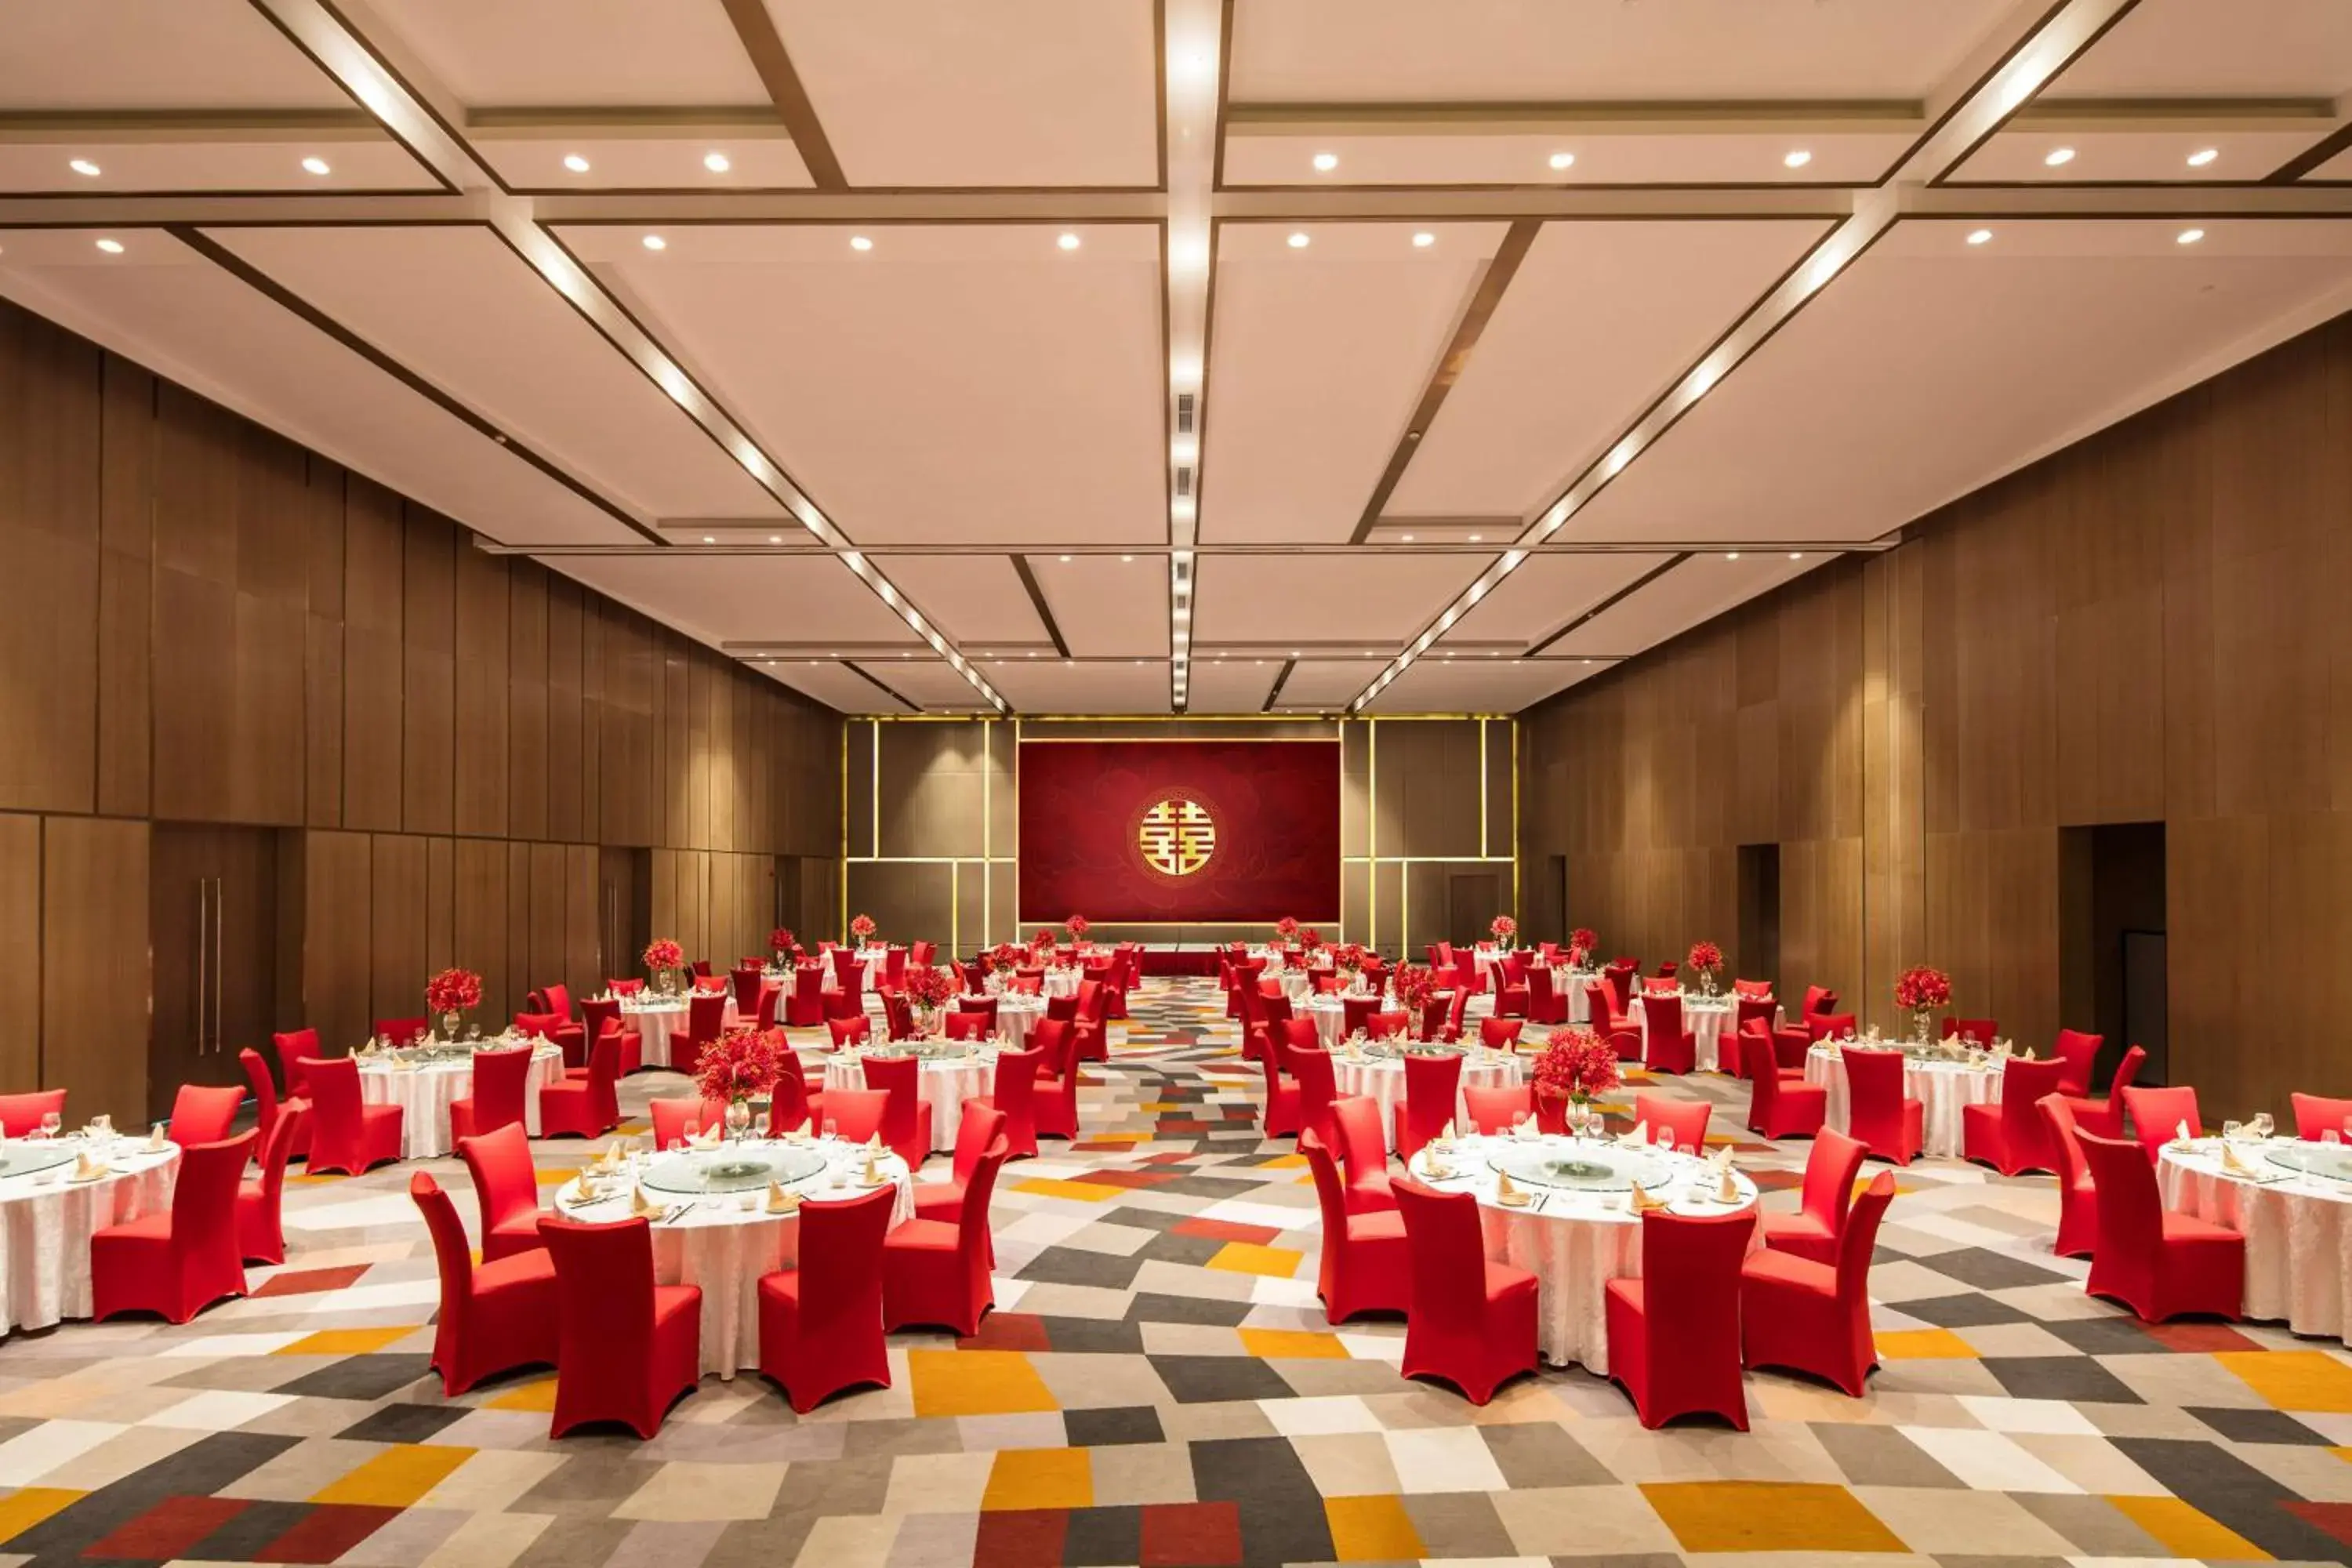 On site, Banquet Facilities in Radisson Exhibition Center Shanghai